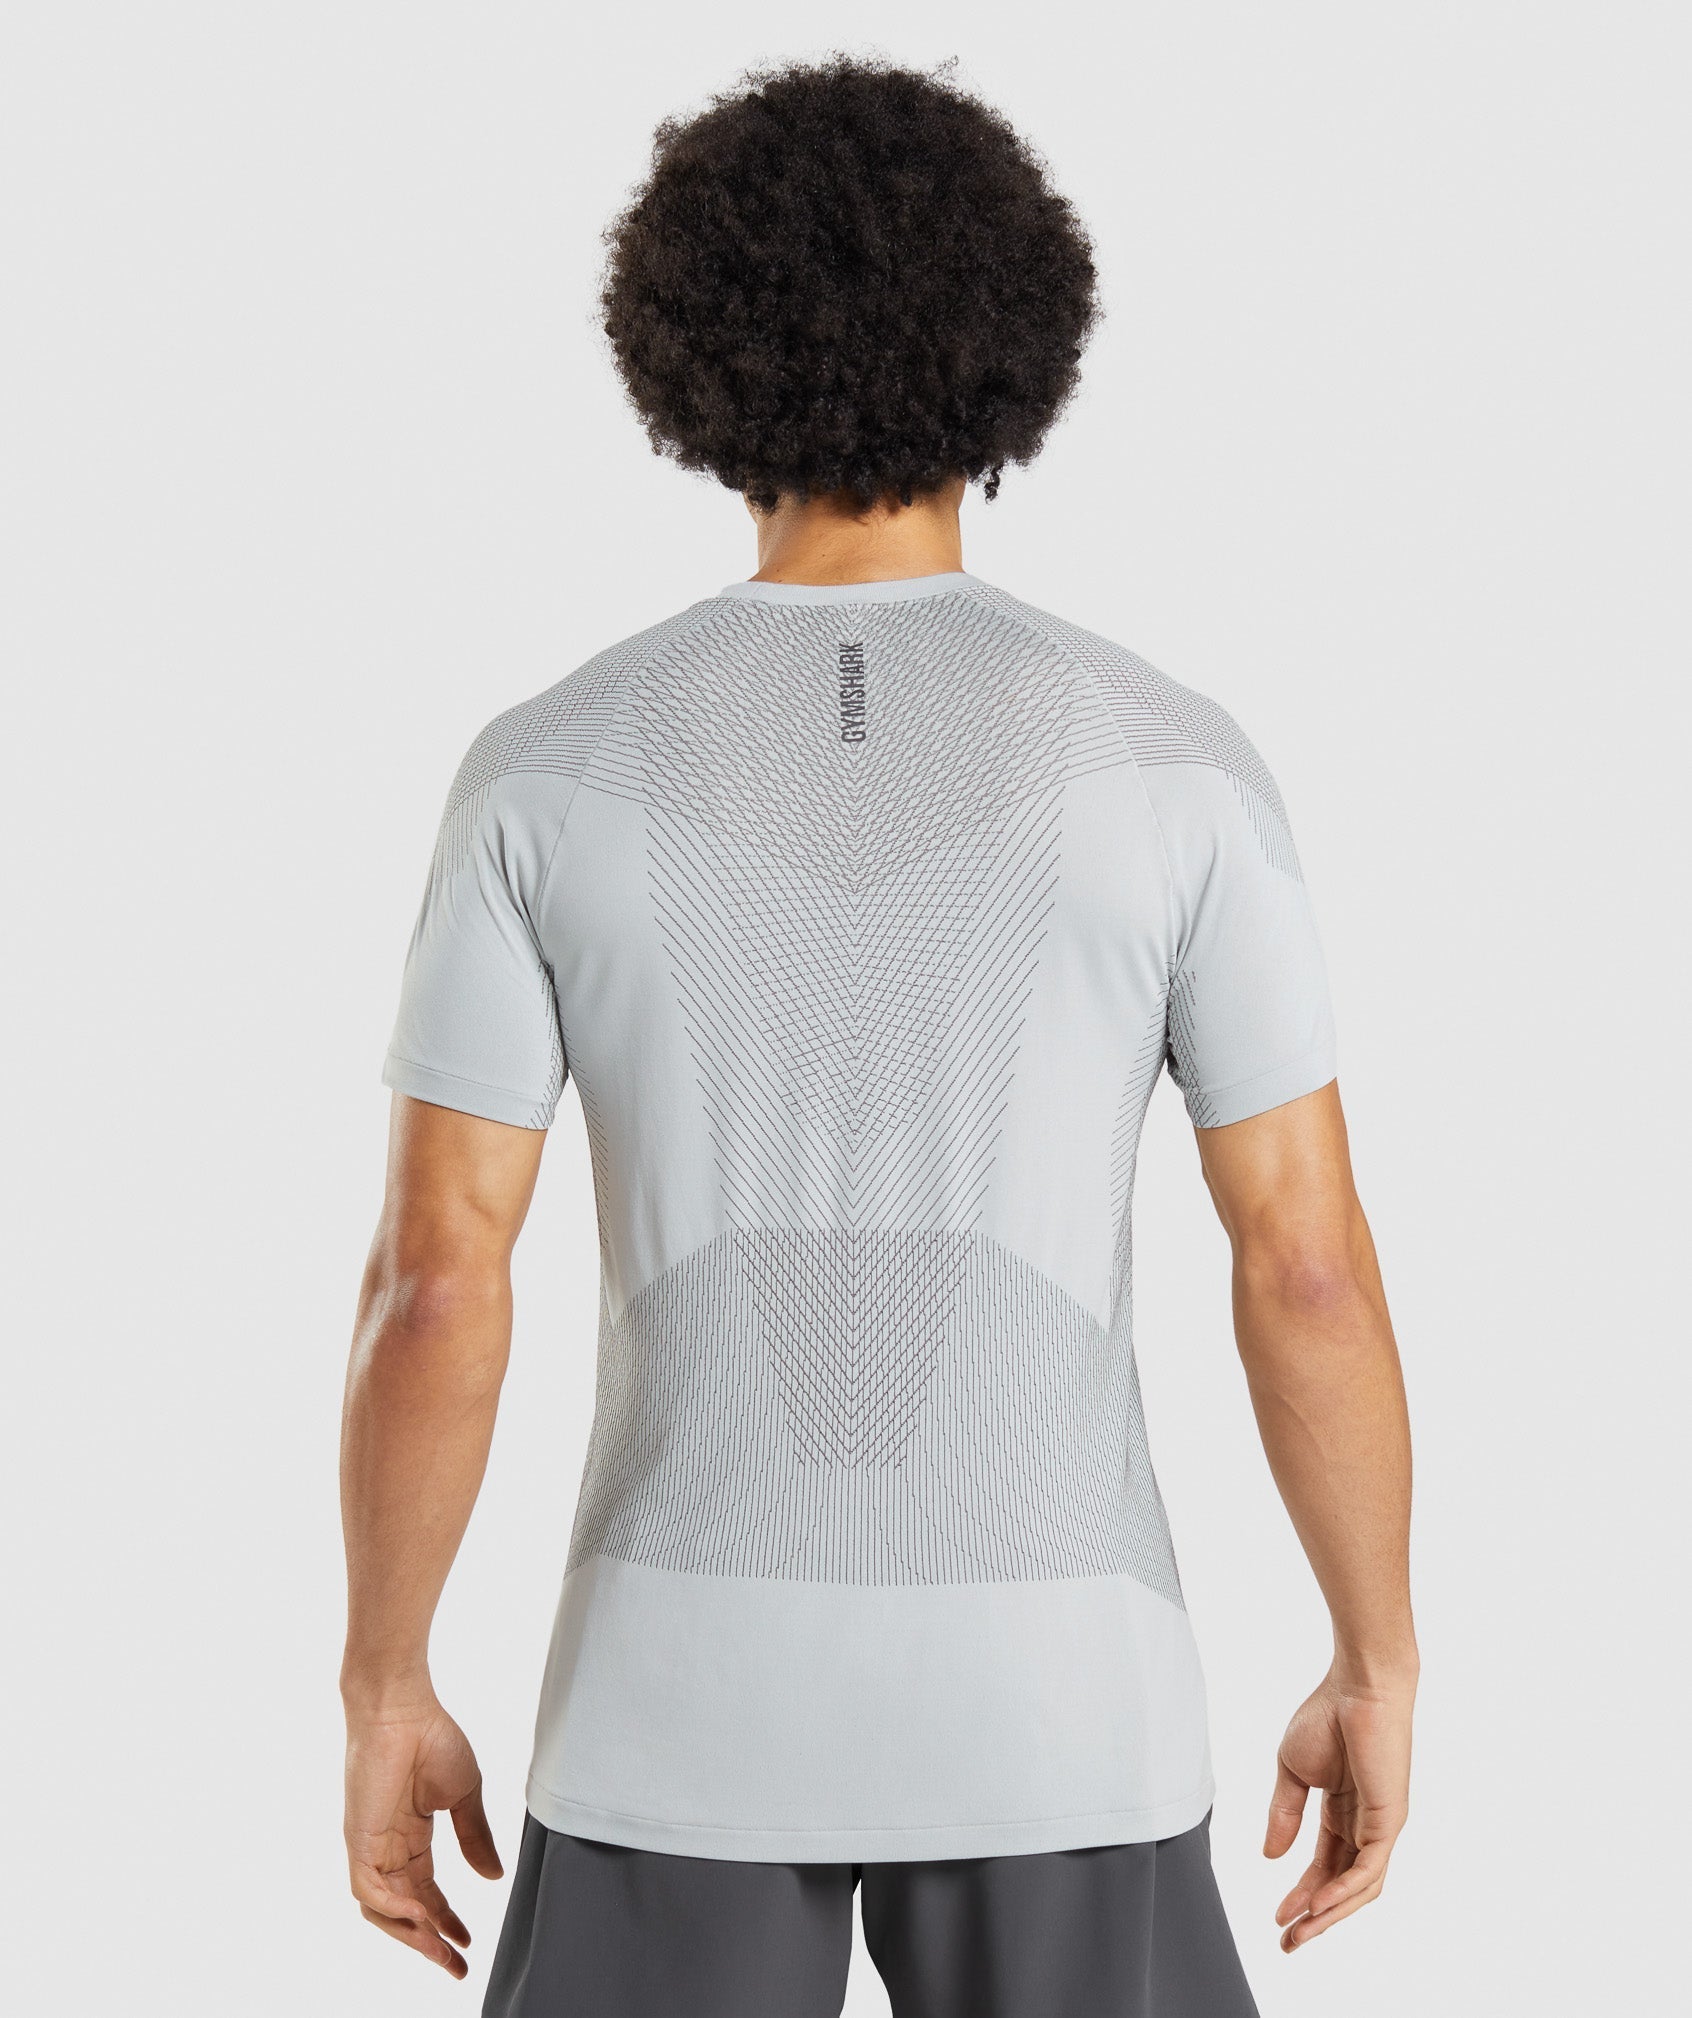 Apex Seamless T-Shirt in Light Grey/Onyx Grey